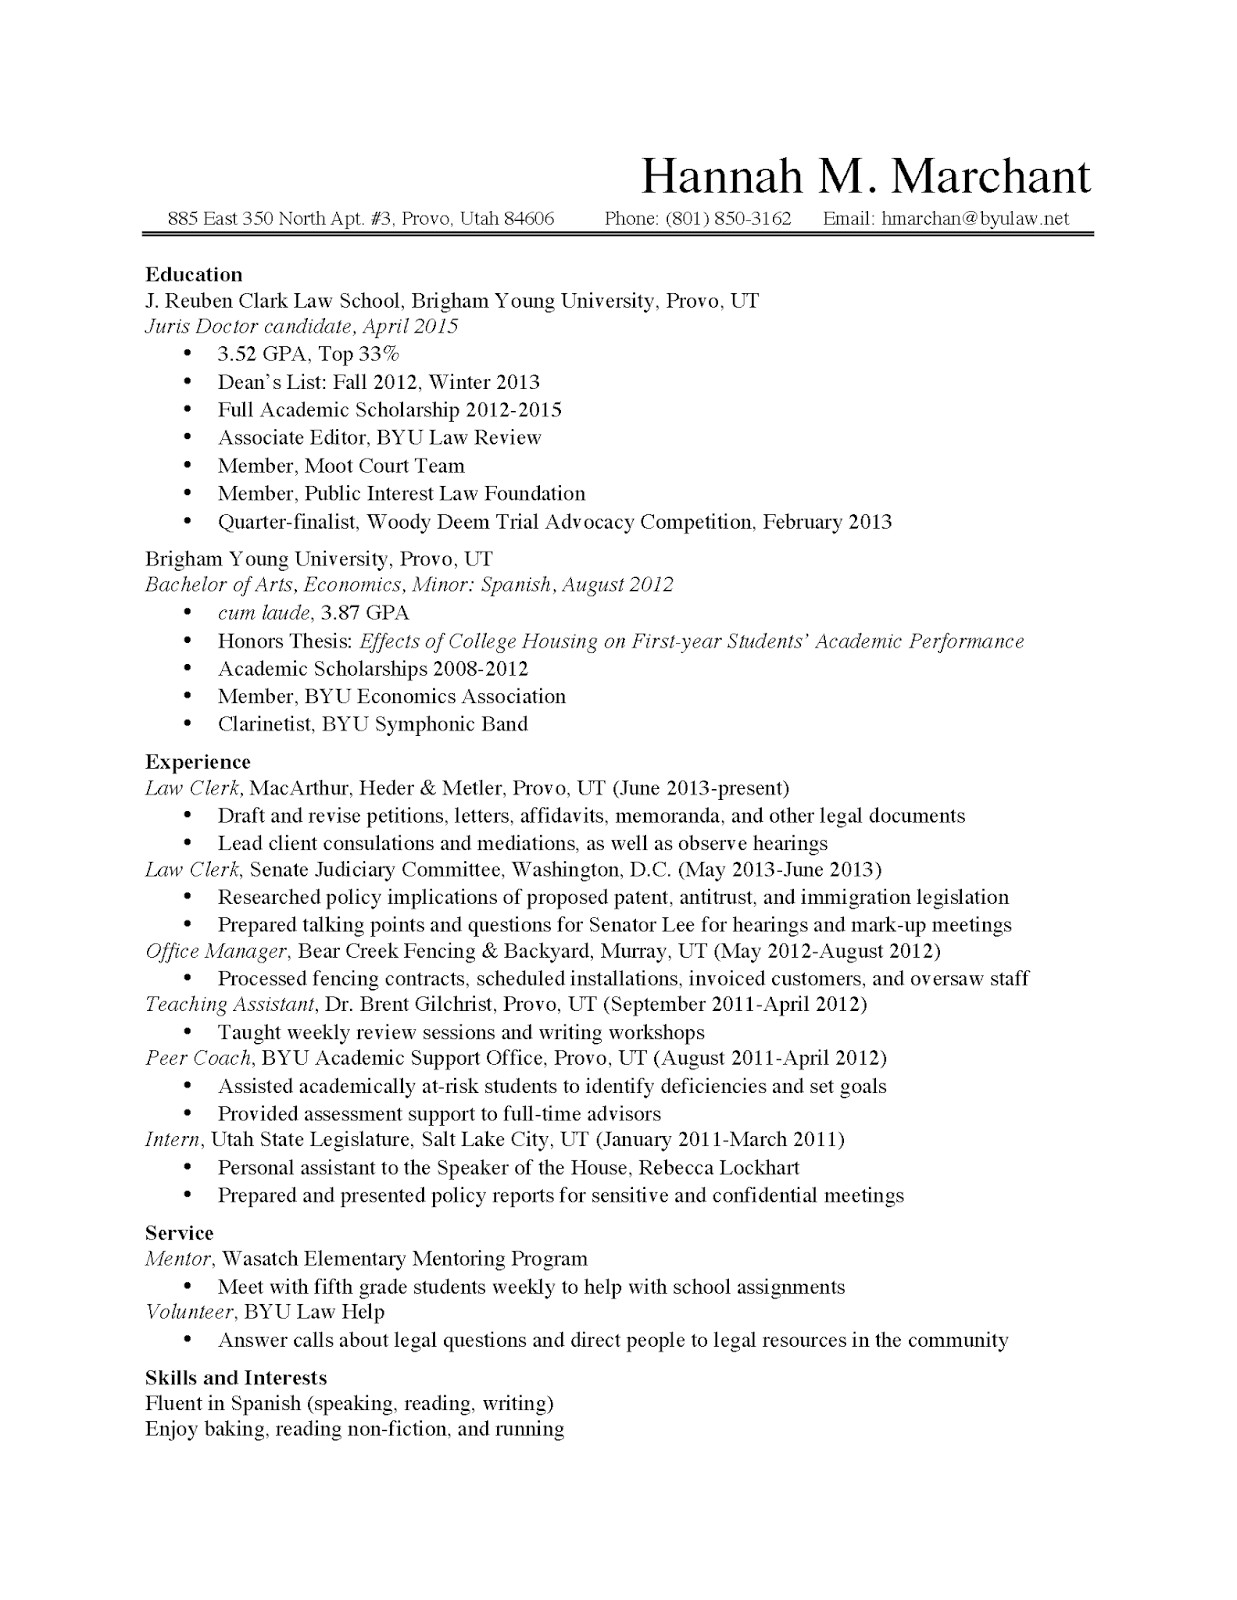 law student resume seeking summer 12